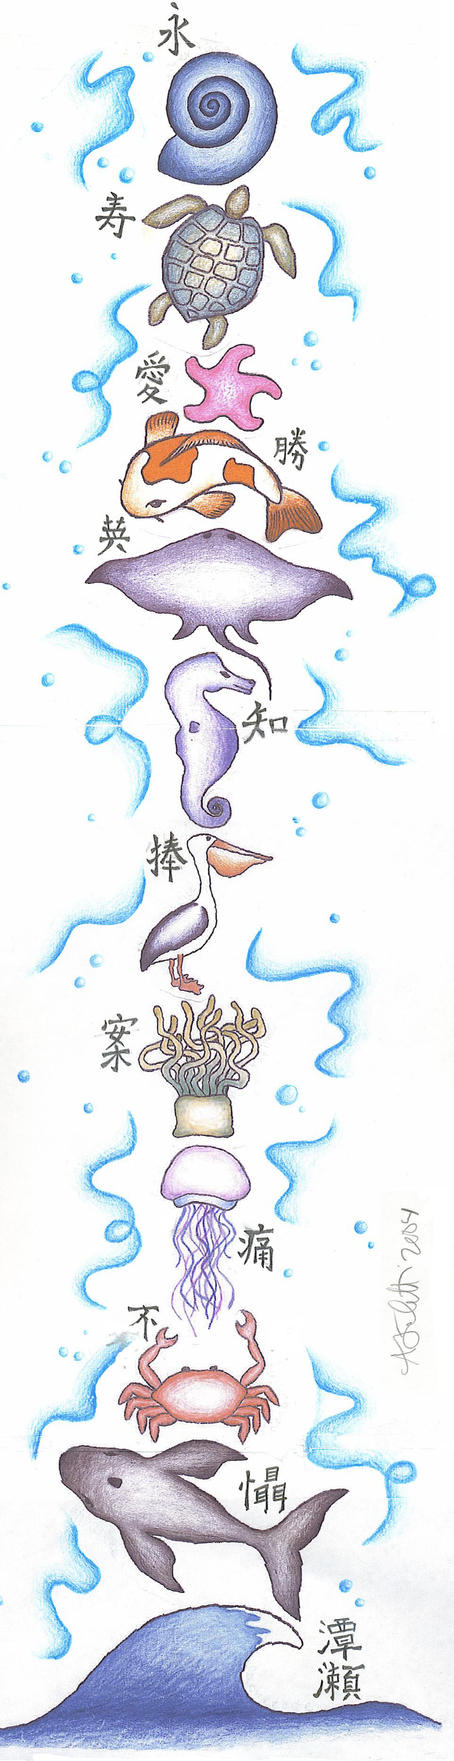 starfish tattoos